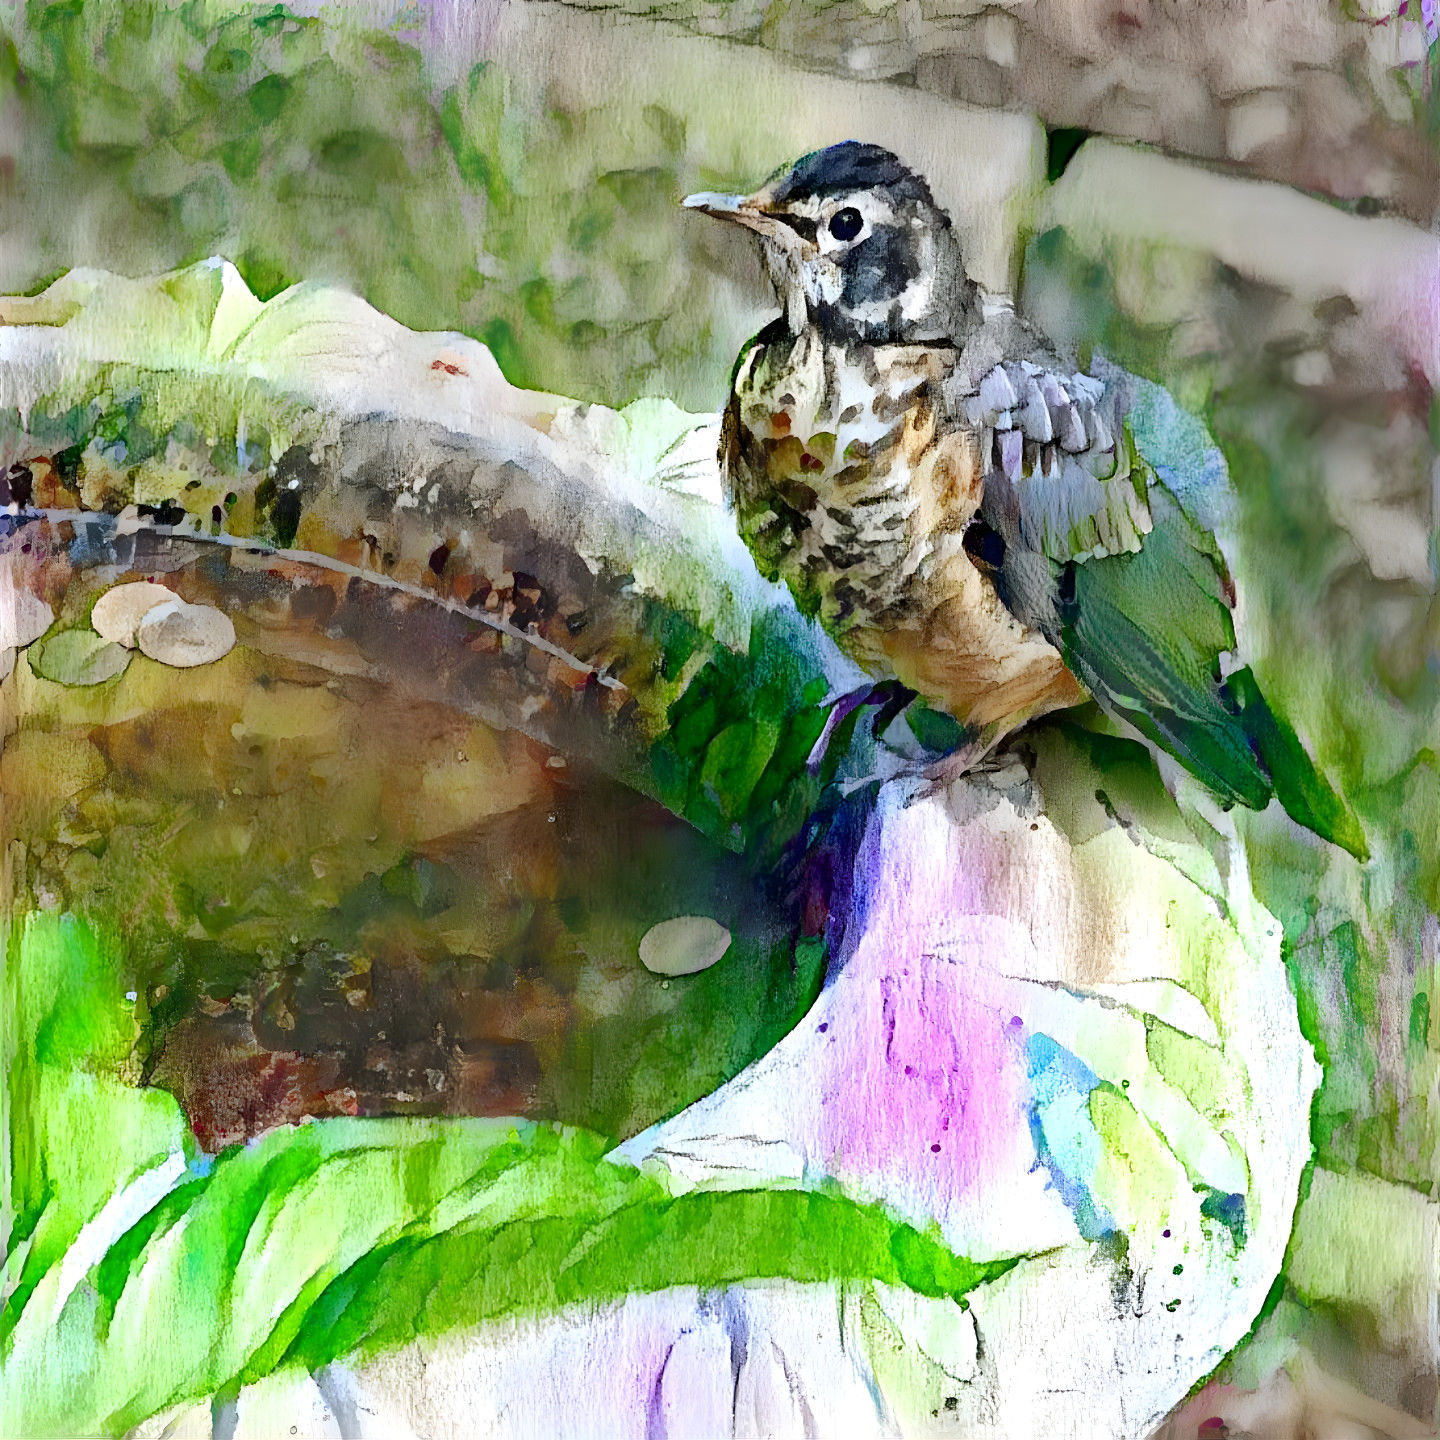 Robin fledgling on the bird bath